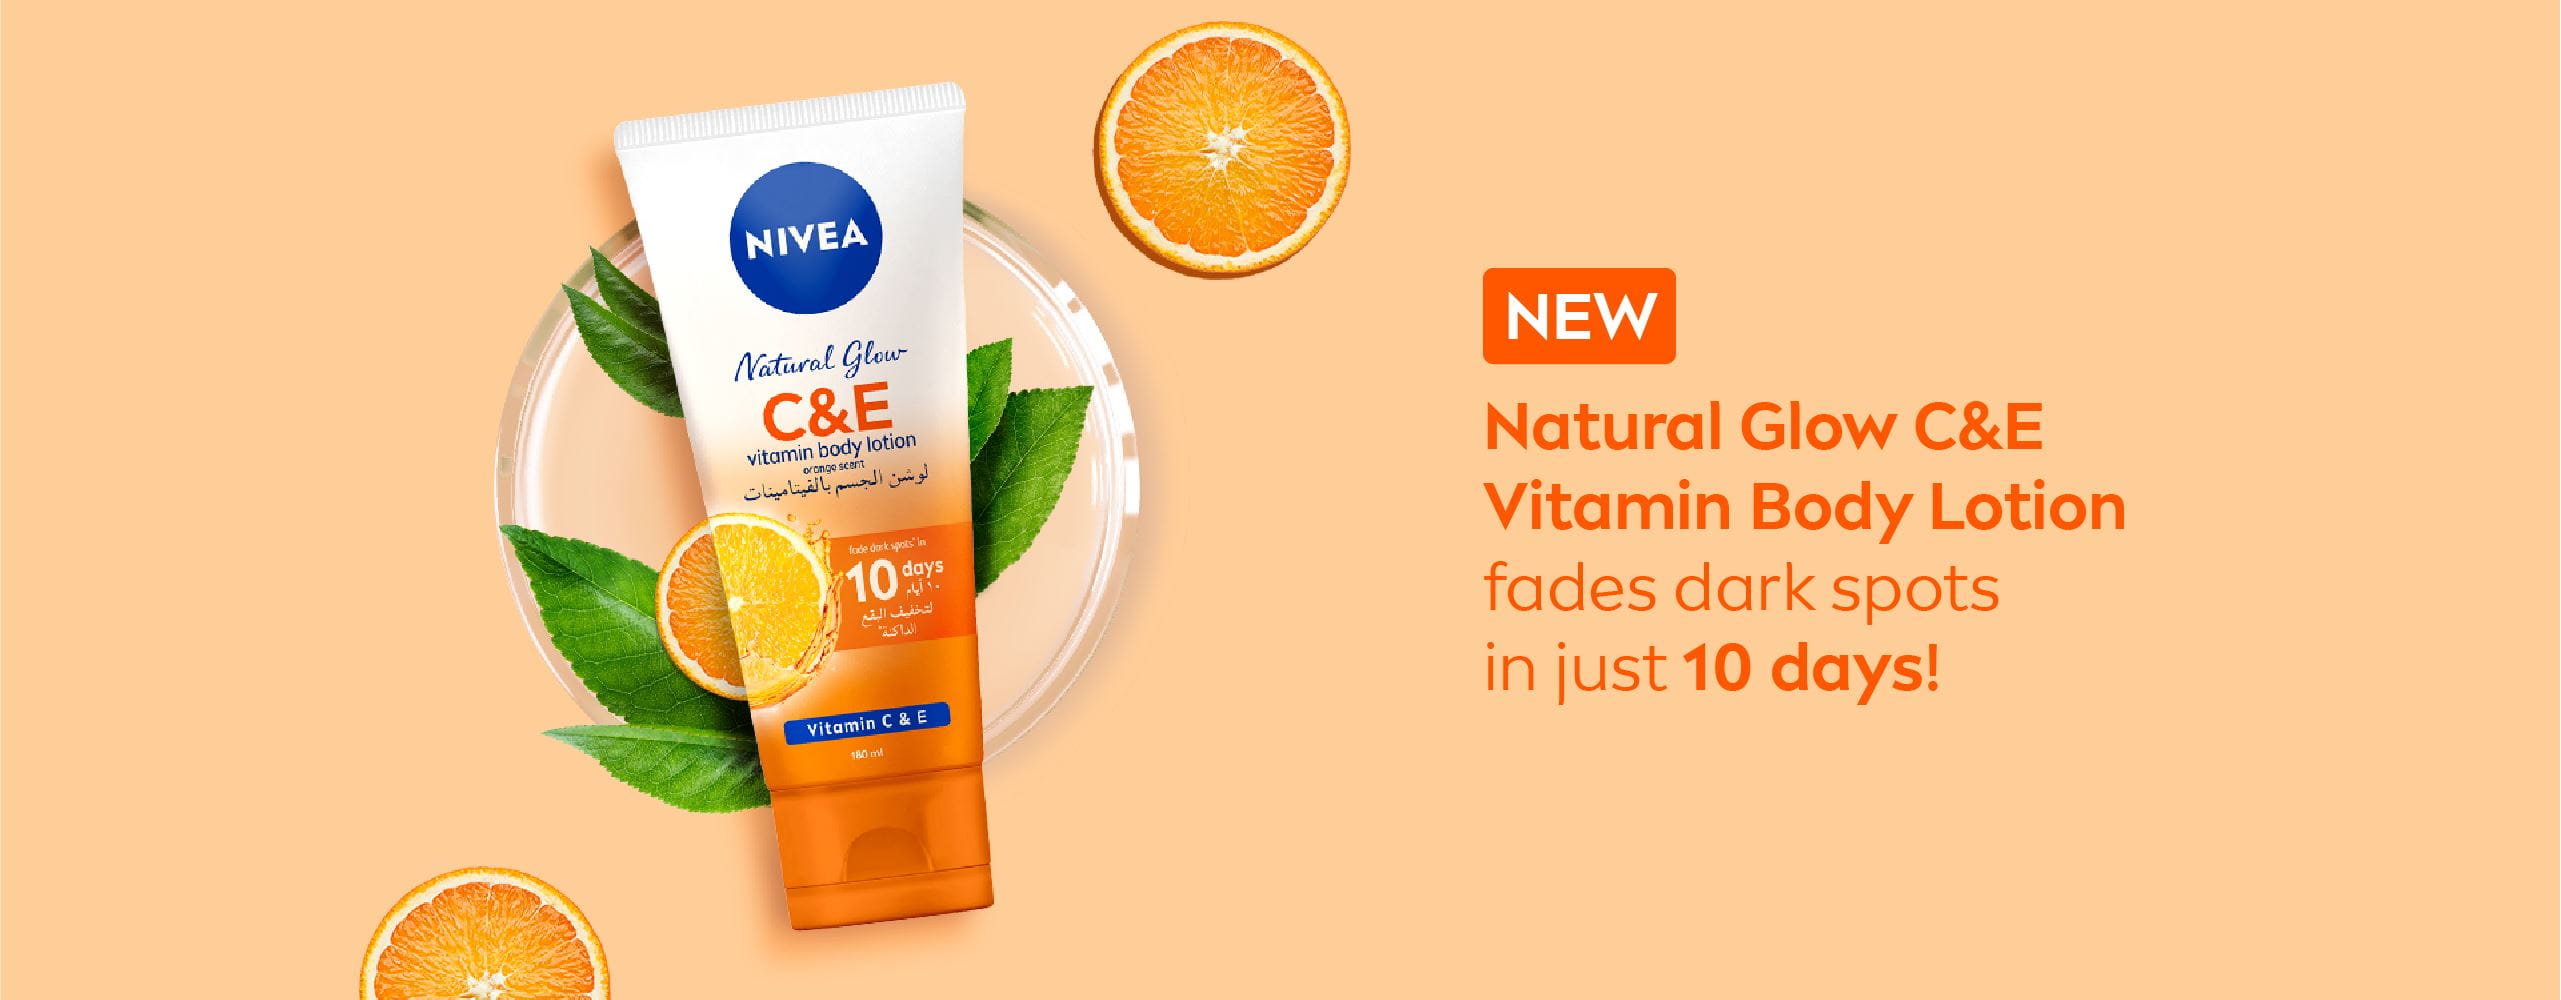 NIVEA Natural Glow C&E Vitamin Body Lotion